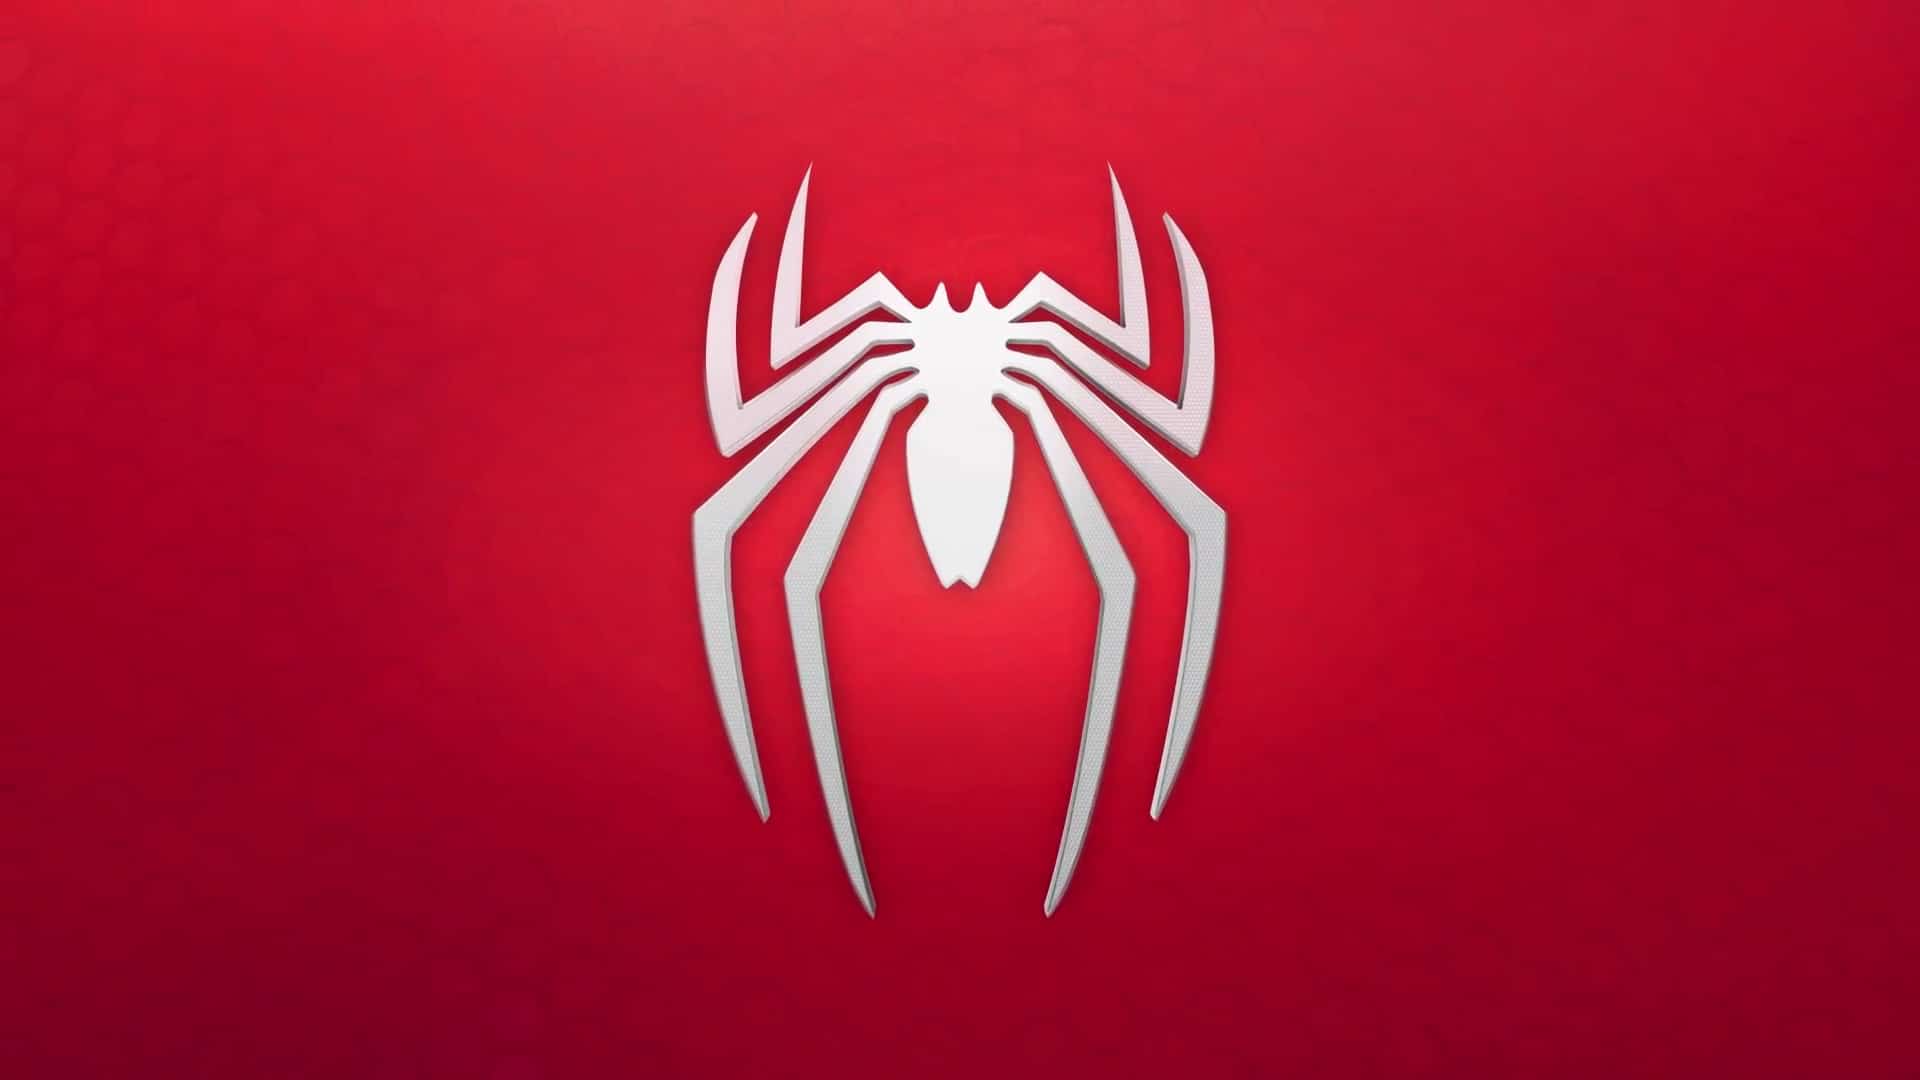 Spider-Man PS4 Logo